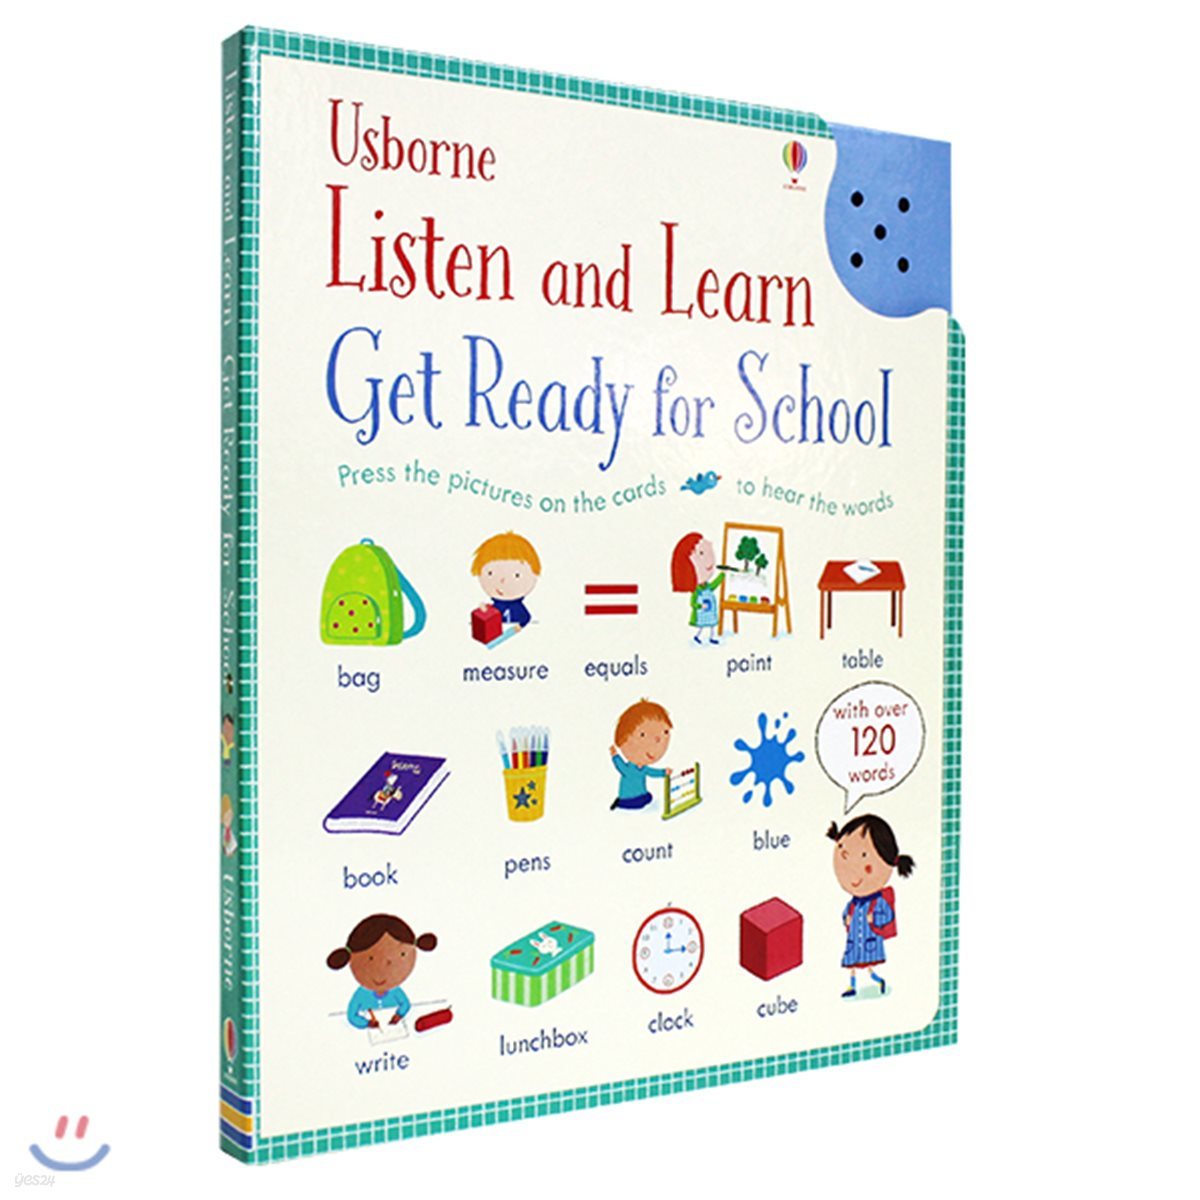 Usborne Listen and Learn Get Ready for School 어스본 유치원, 학교 생활 준비 영어 사운드북 (예비 초등)